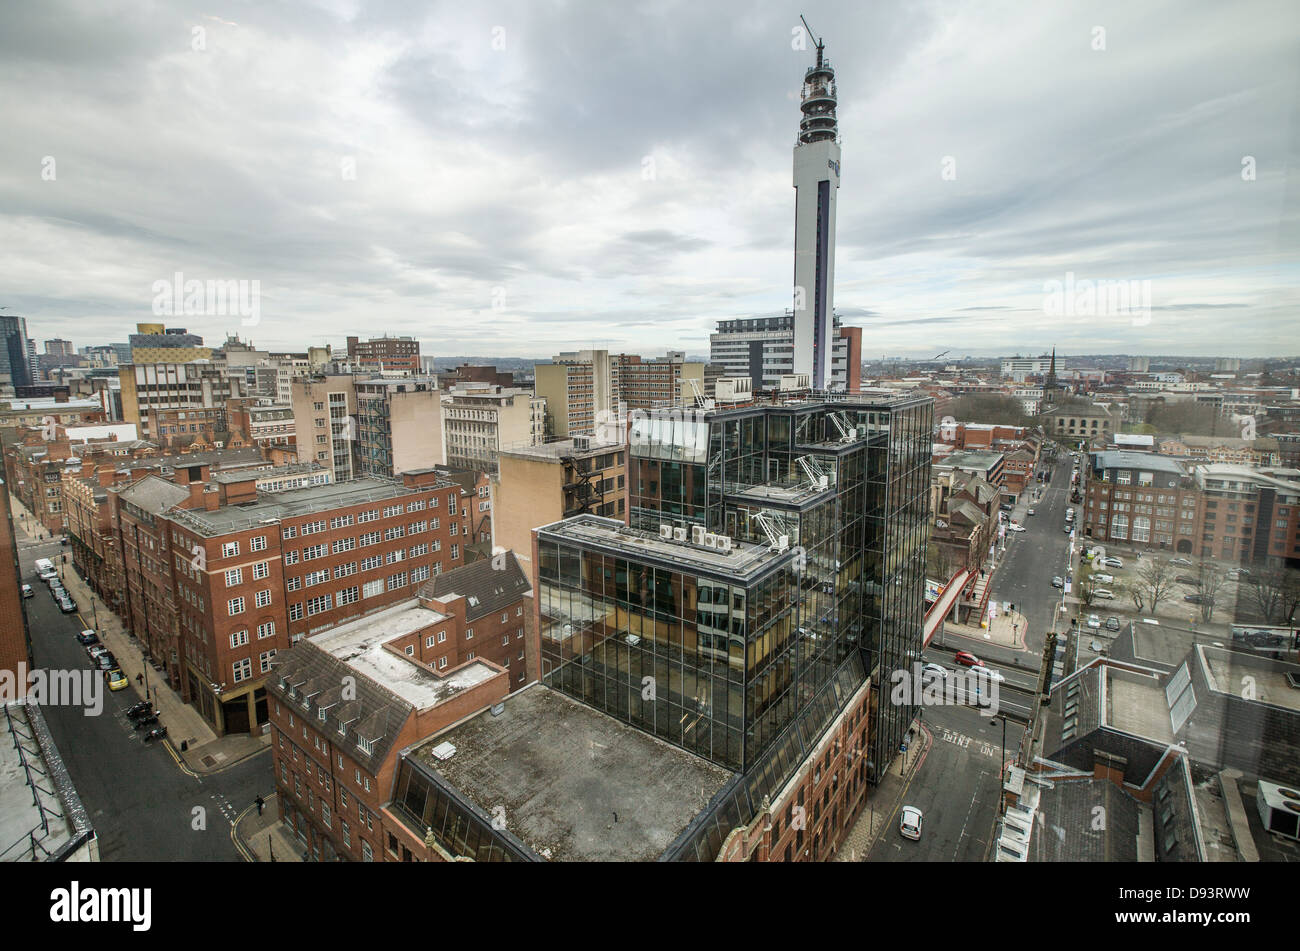 A view of Birmingham City Centre, West Midlands, UK. Stock Photo